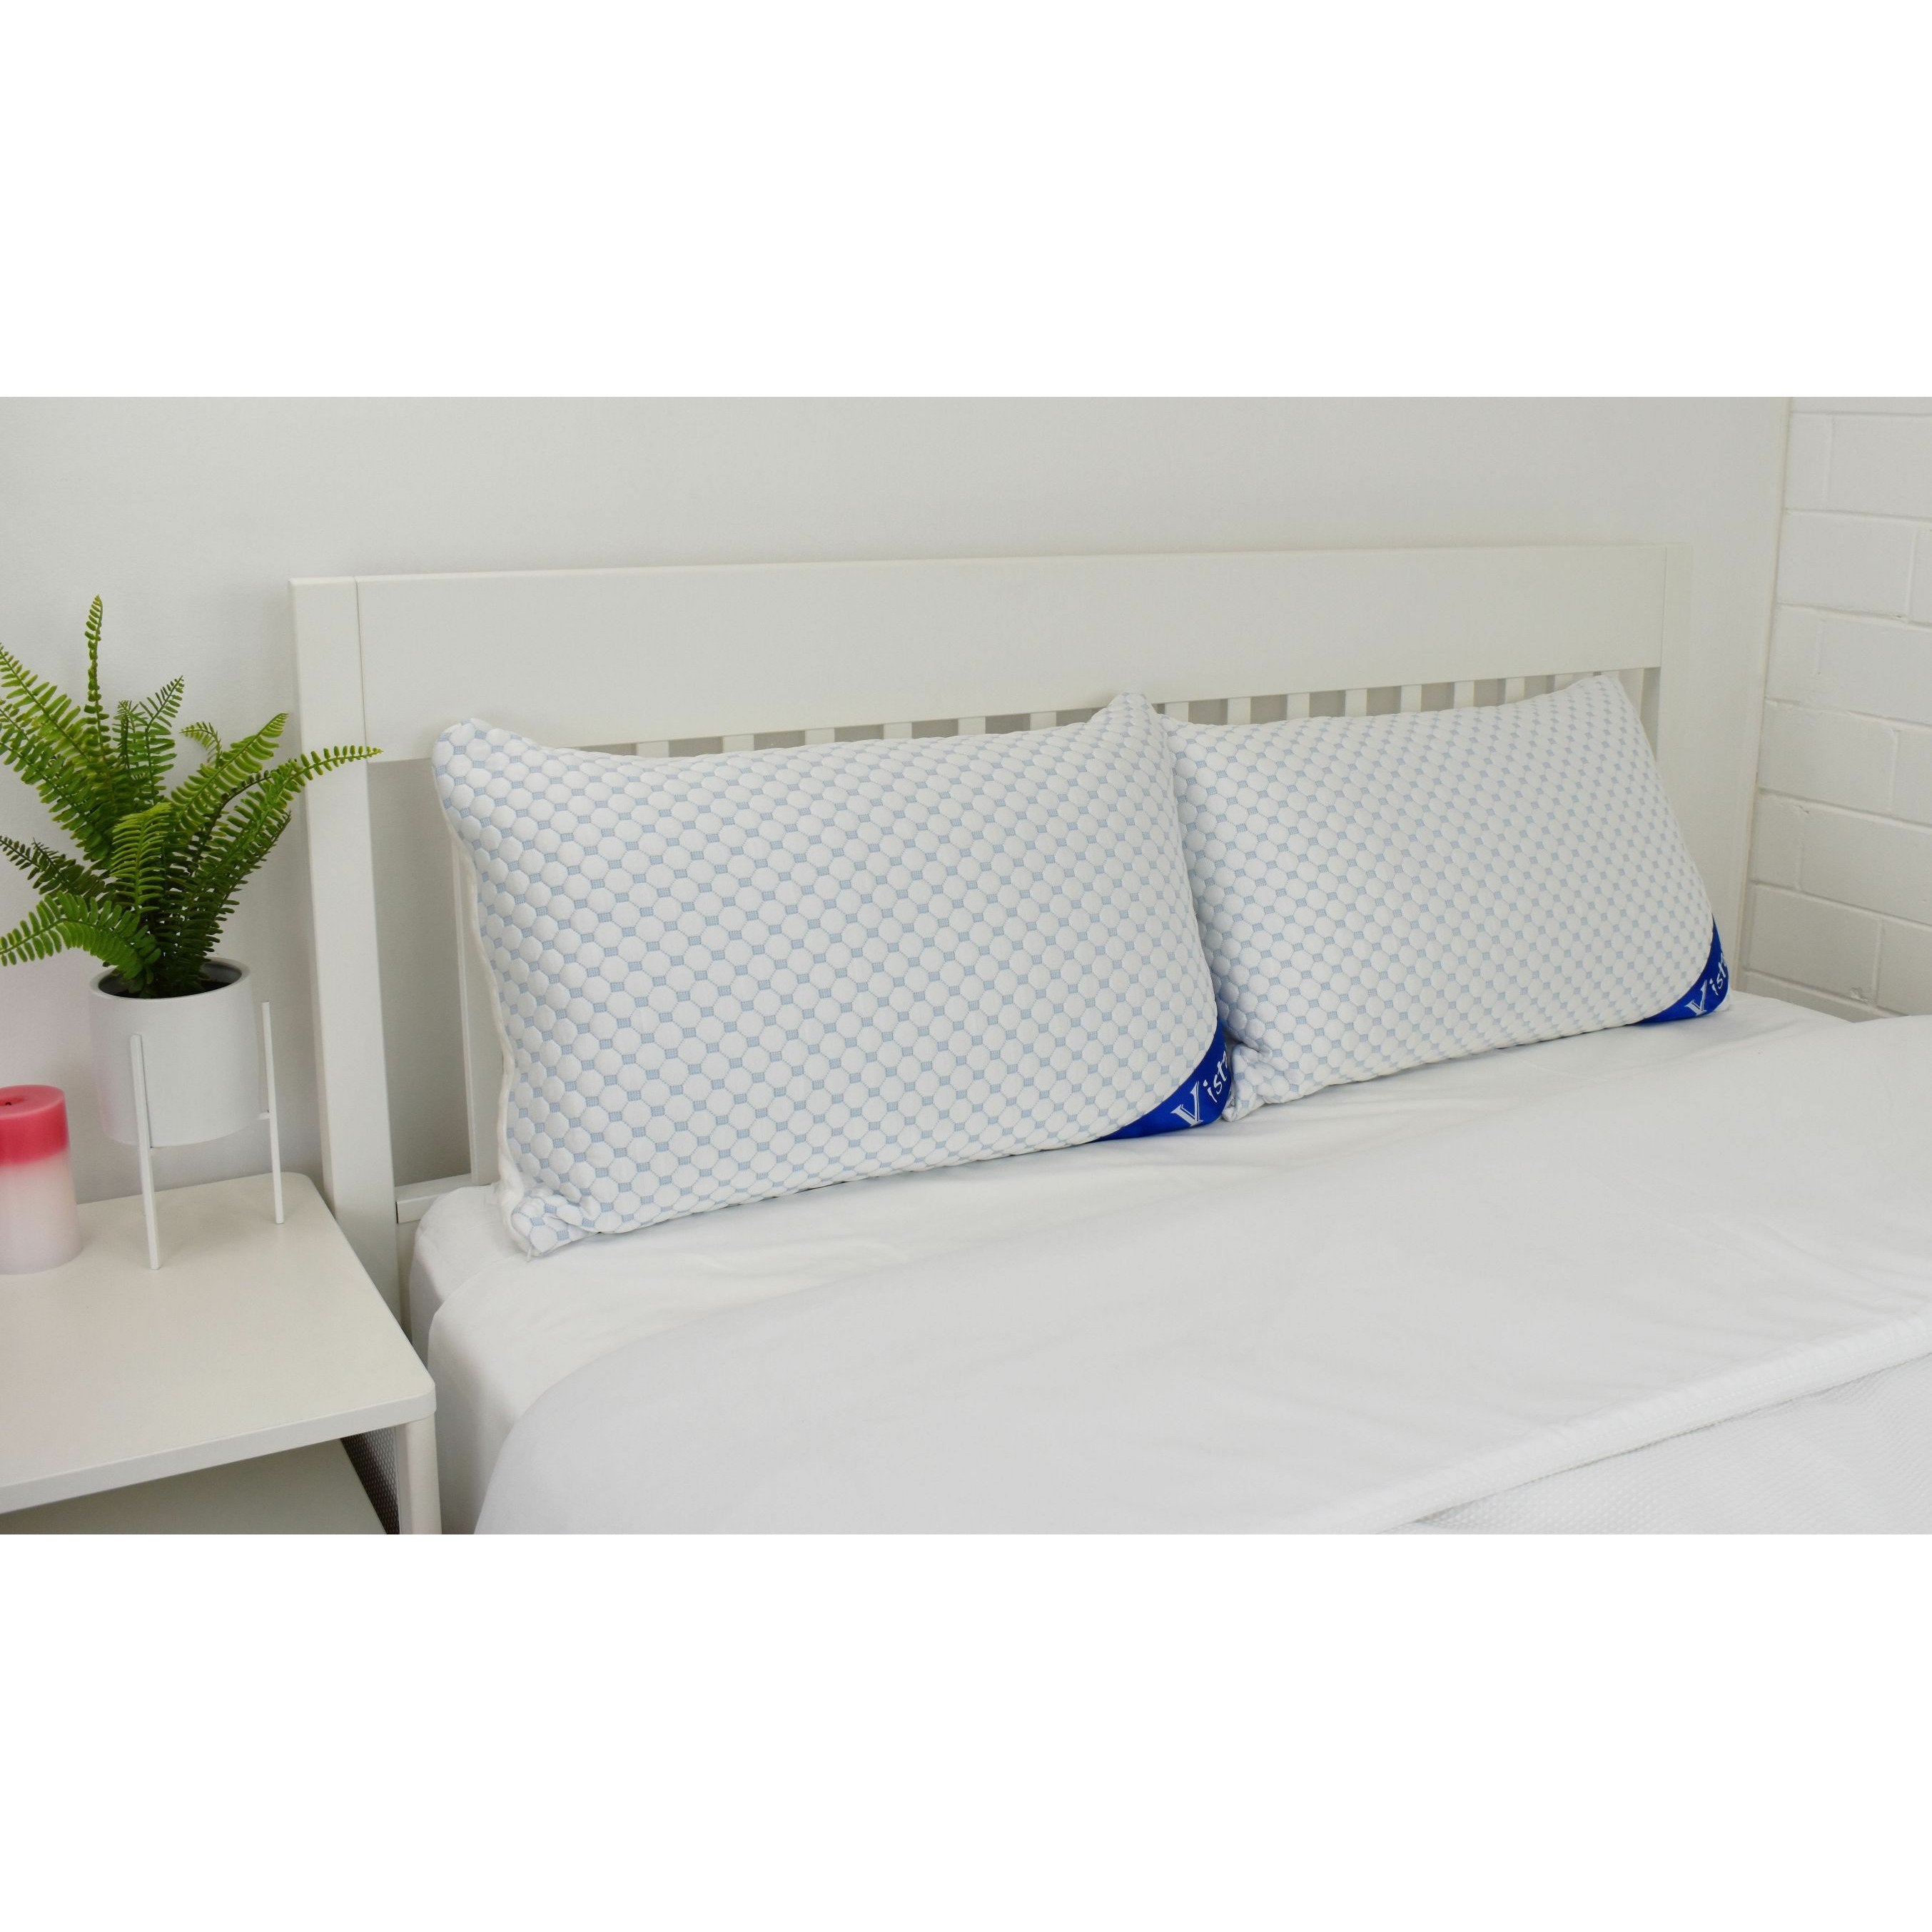 2 in 1 Adjustable Luxury Pillow - Yellowtree